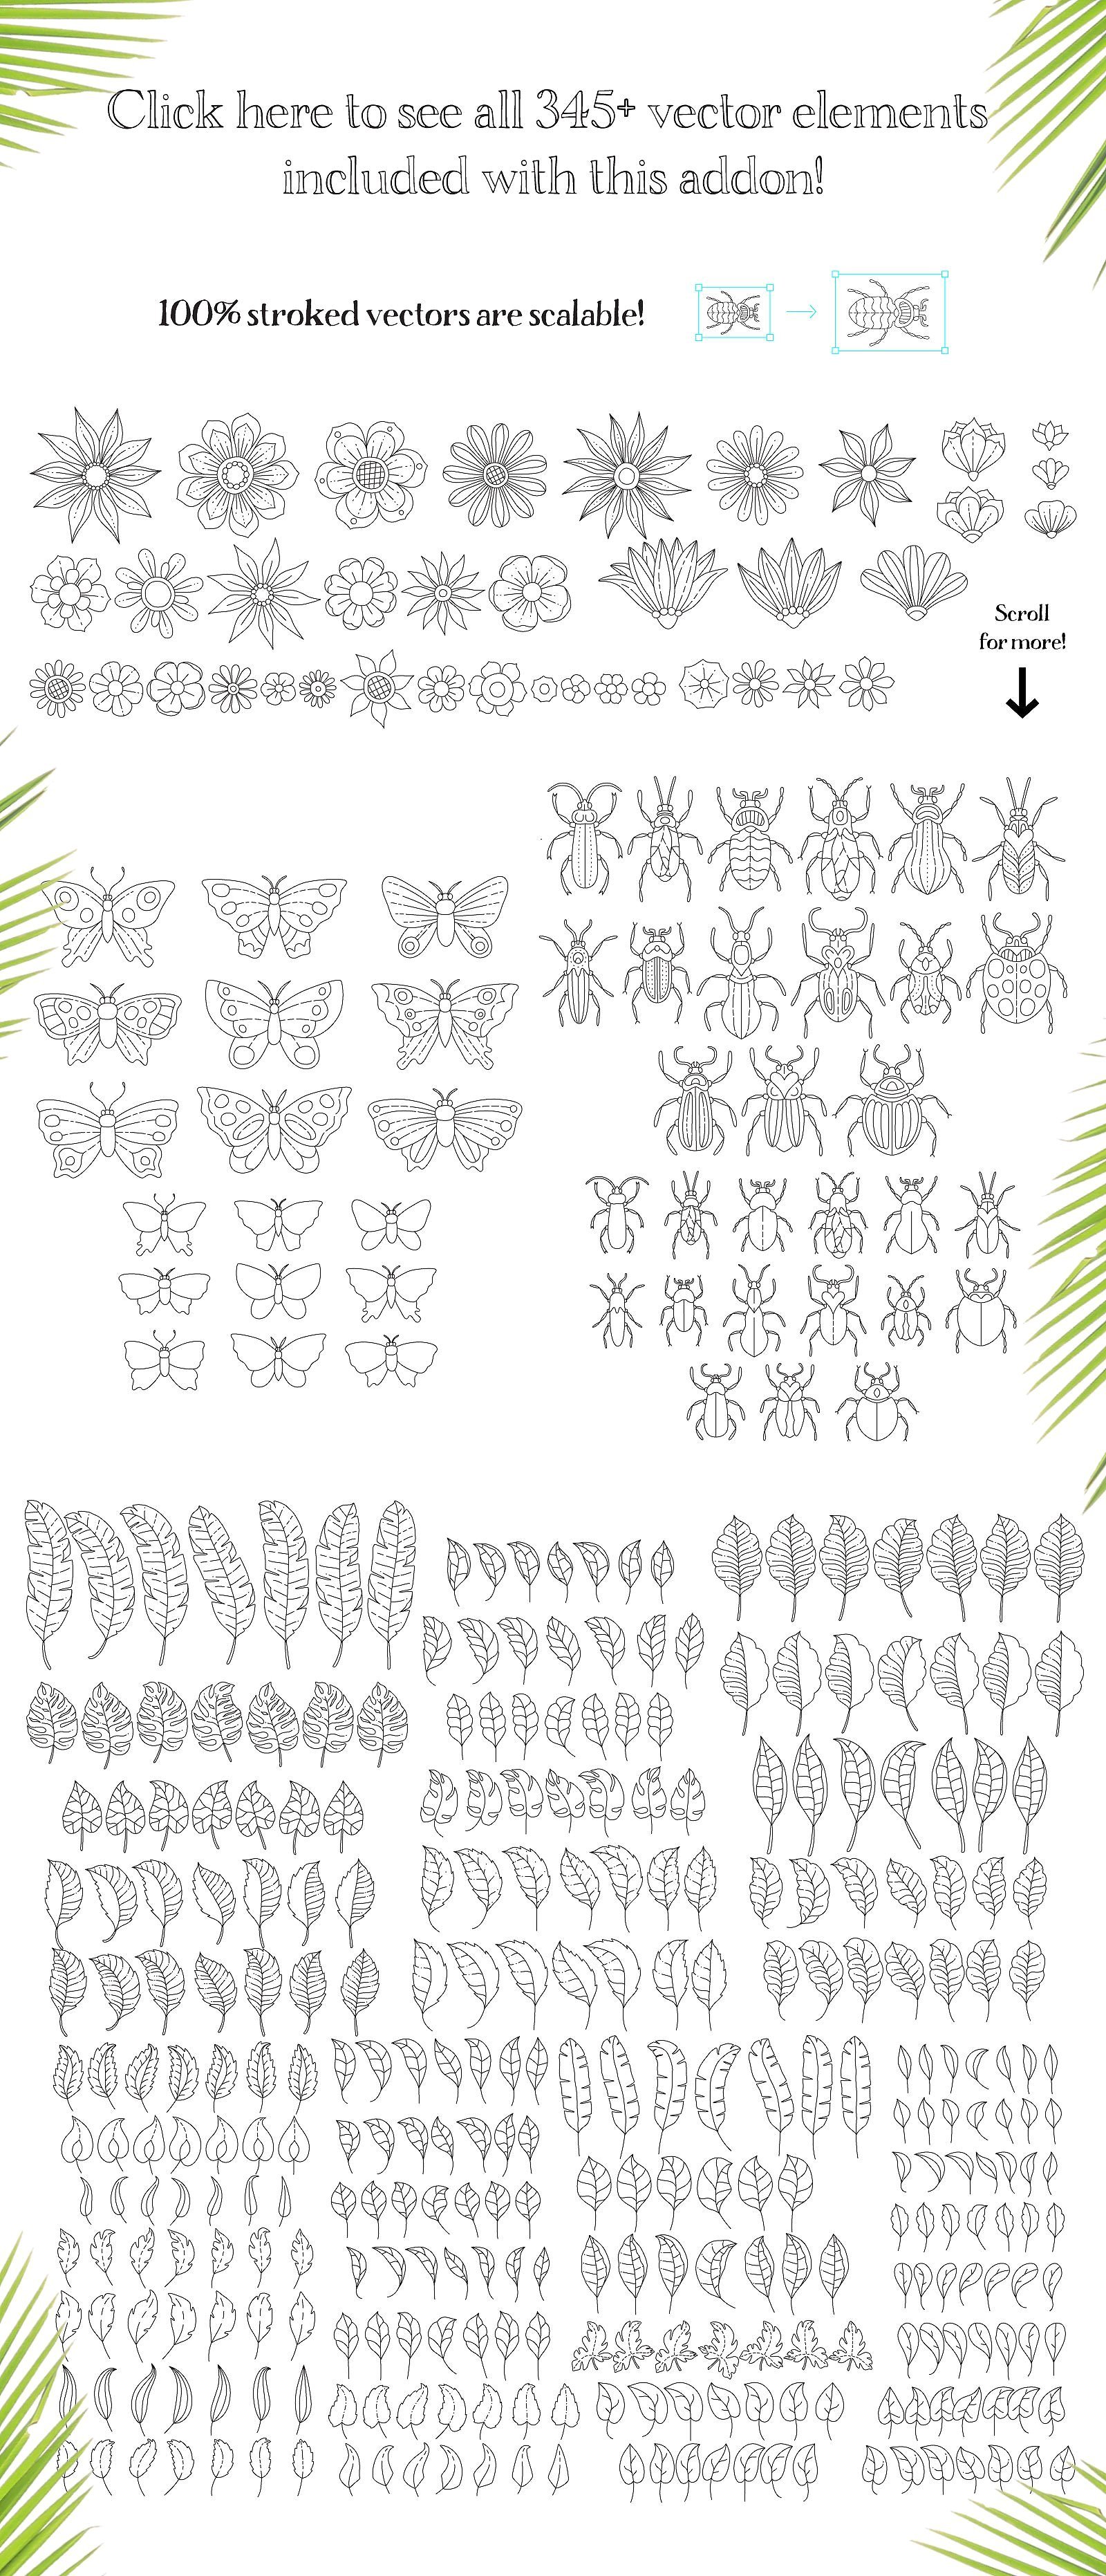 Rainforest Mandala Illustration Creator